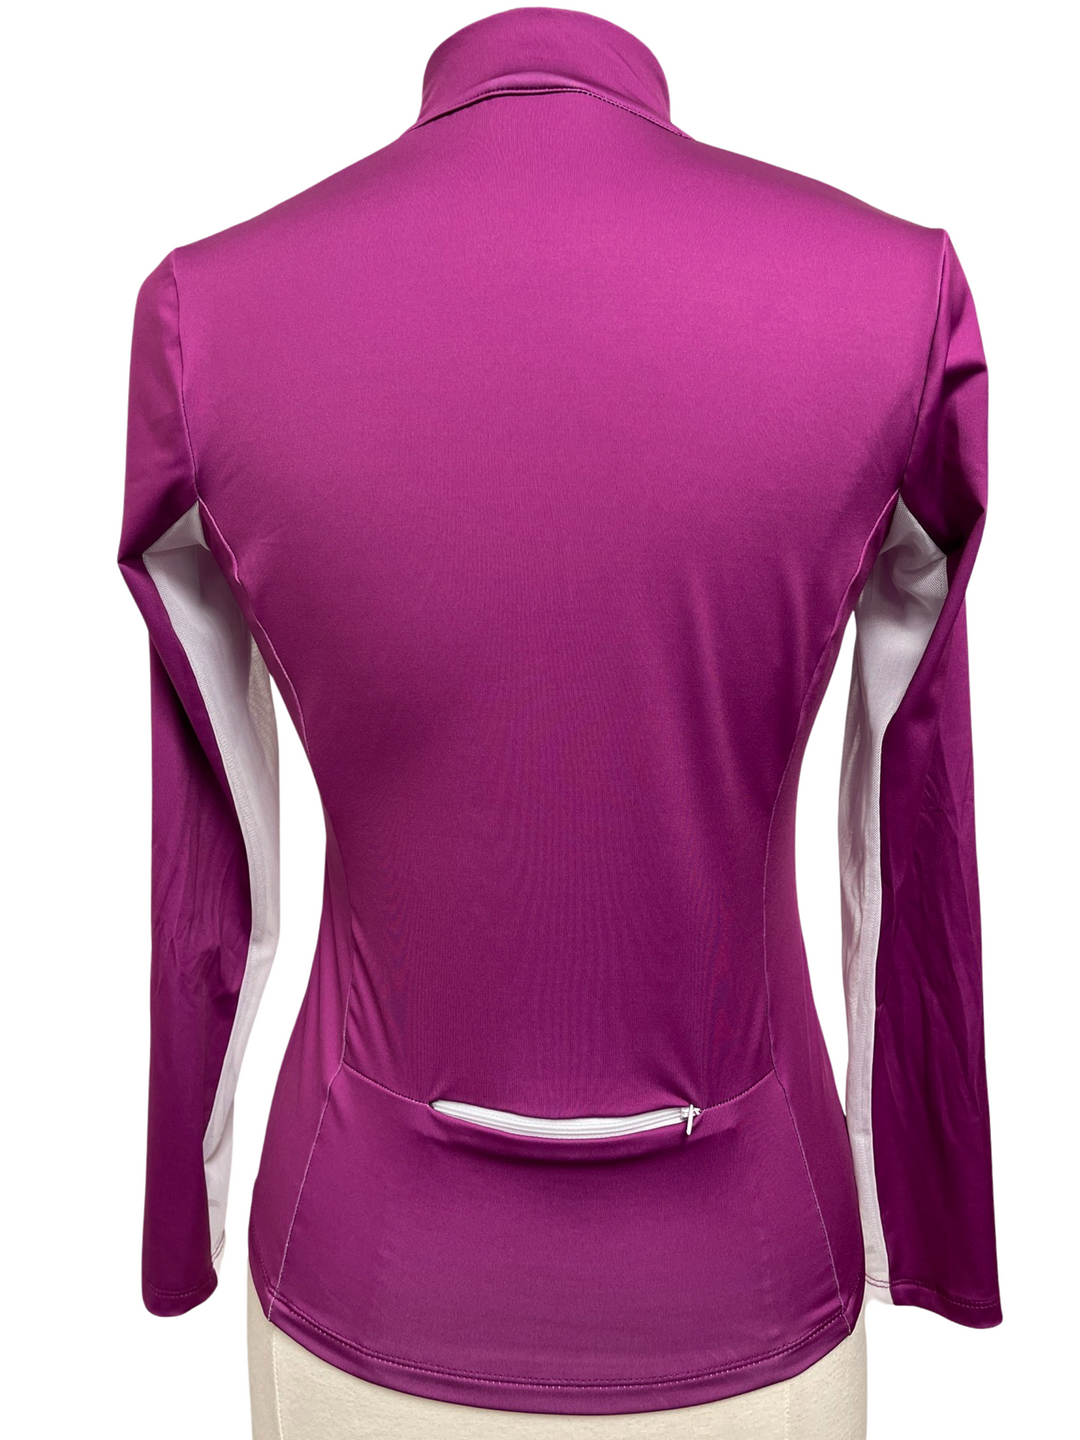 Amy Sport Katelyn 2.0 Long Sleeve Top - Pink Rose X-Small - Skorzie